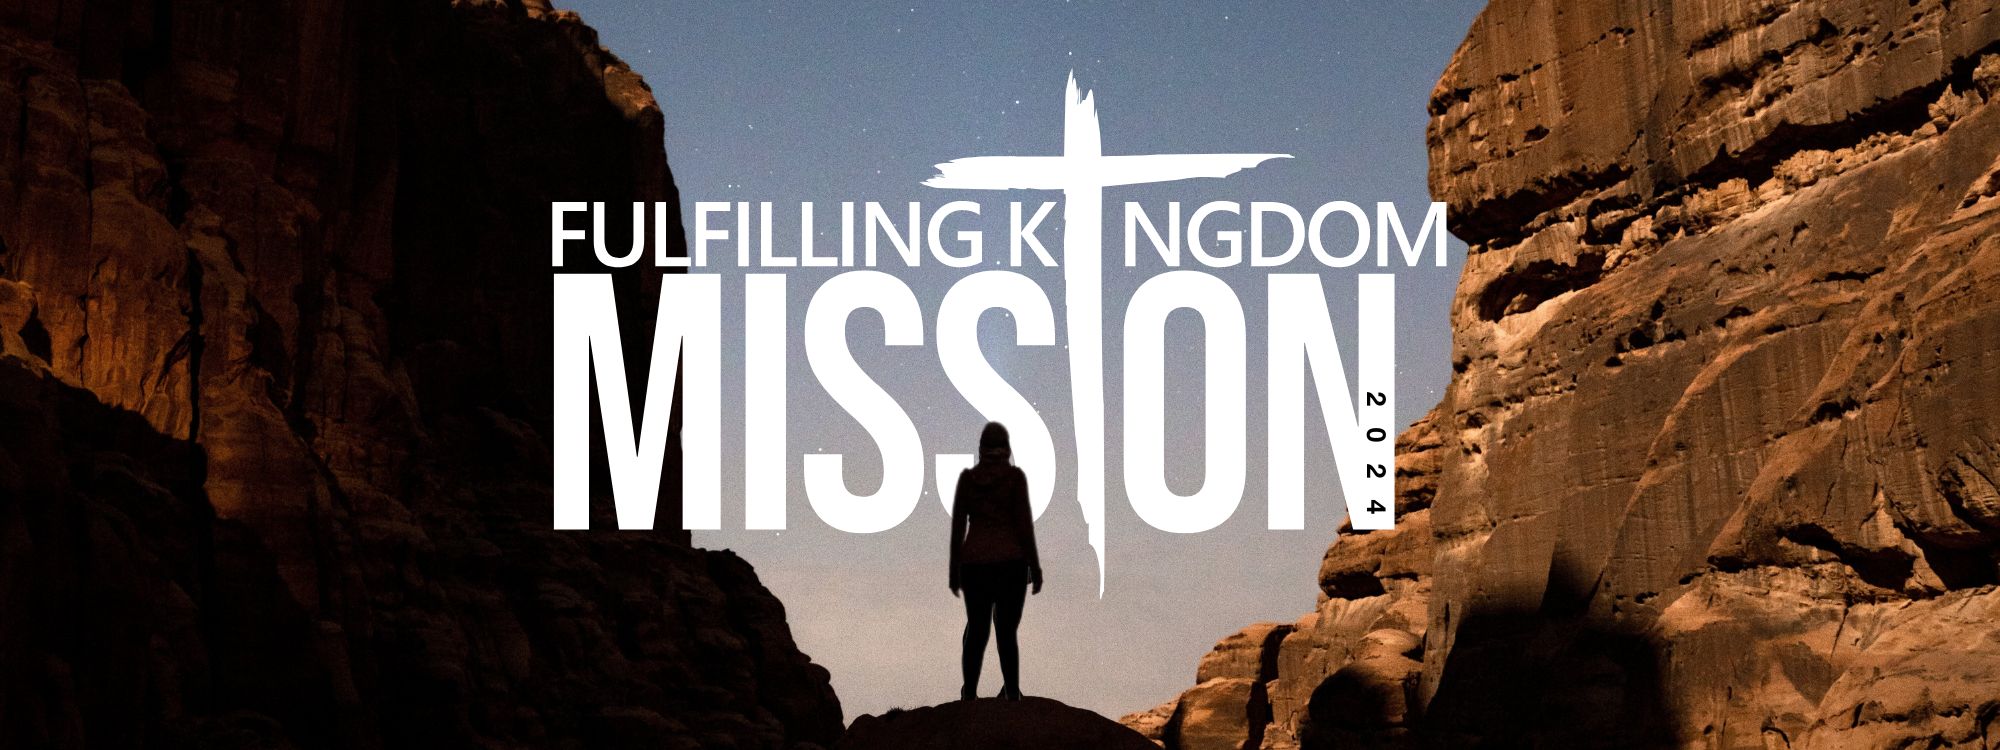 5. Fulfilling kingdom mission